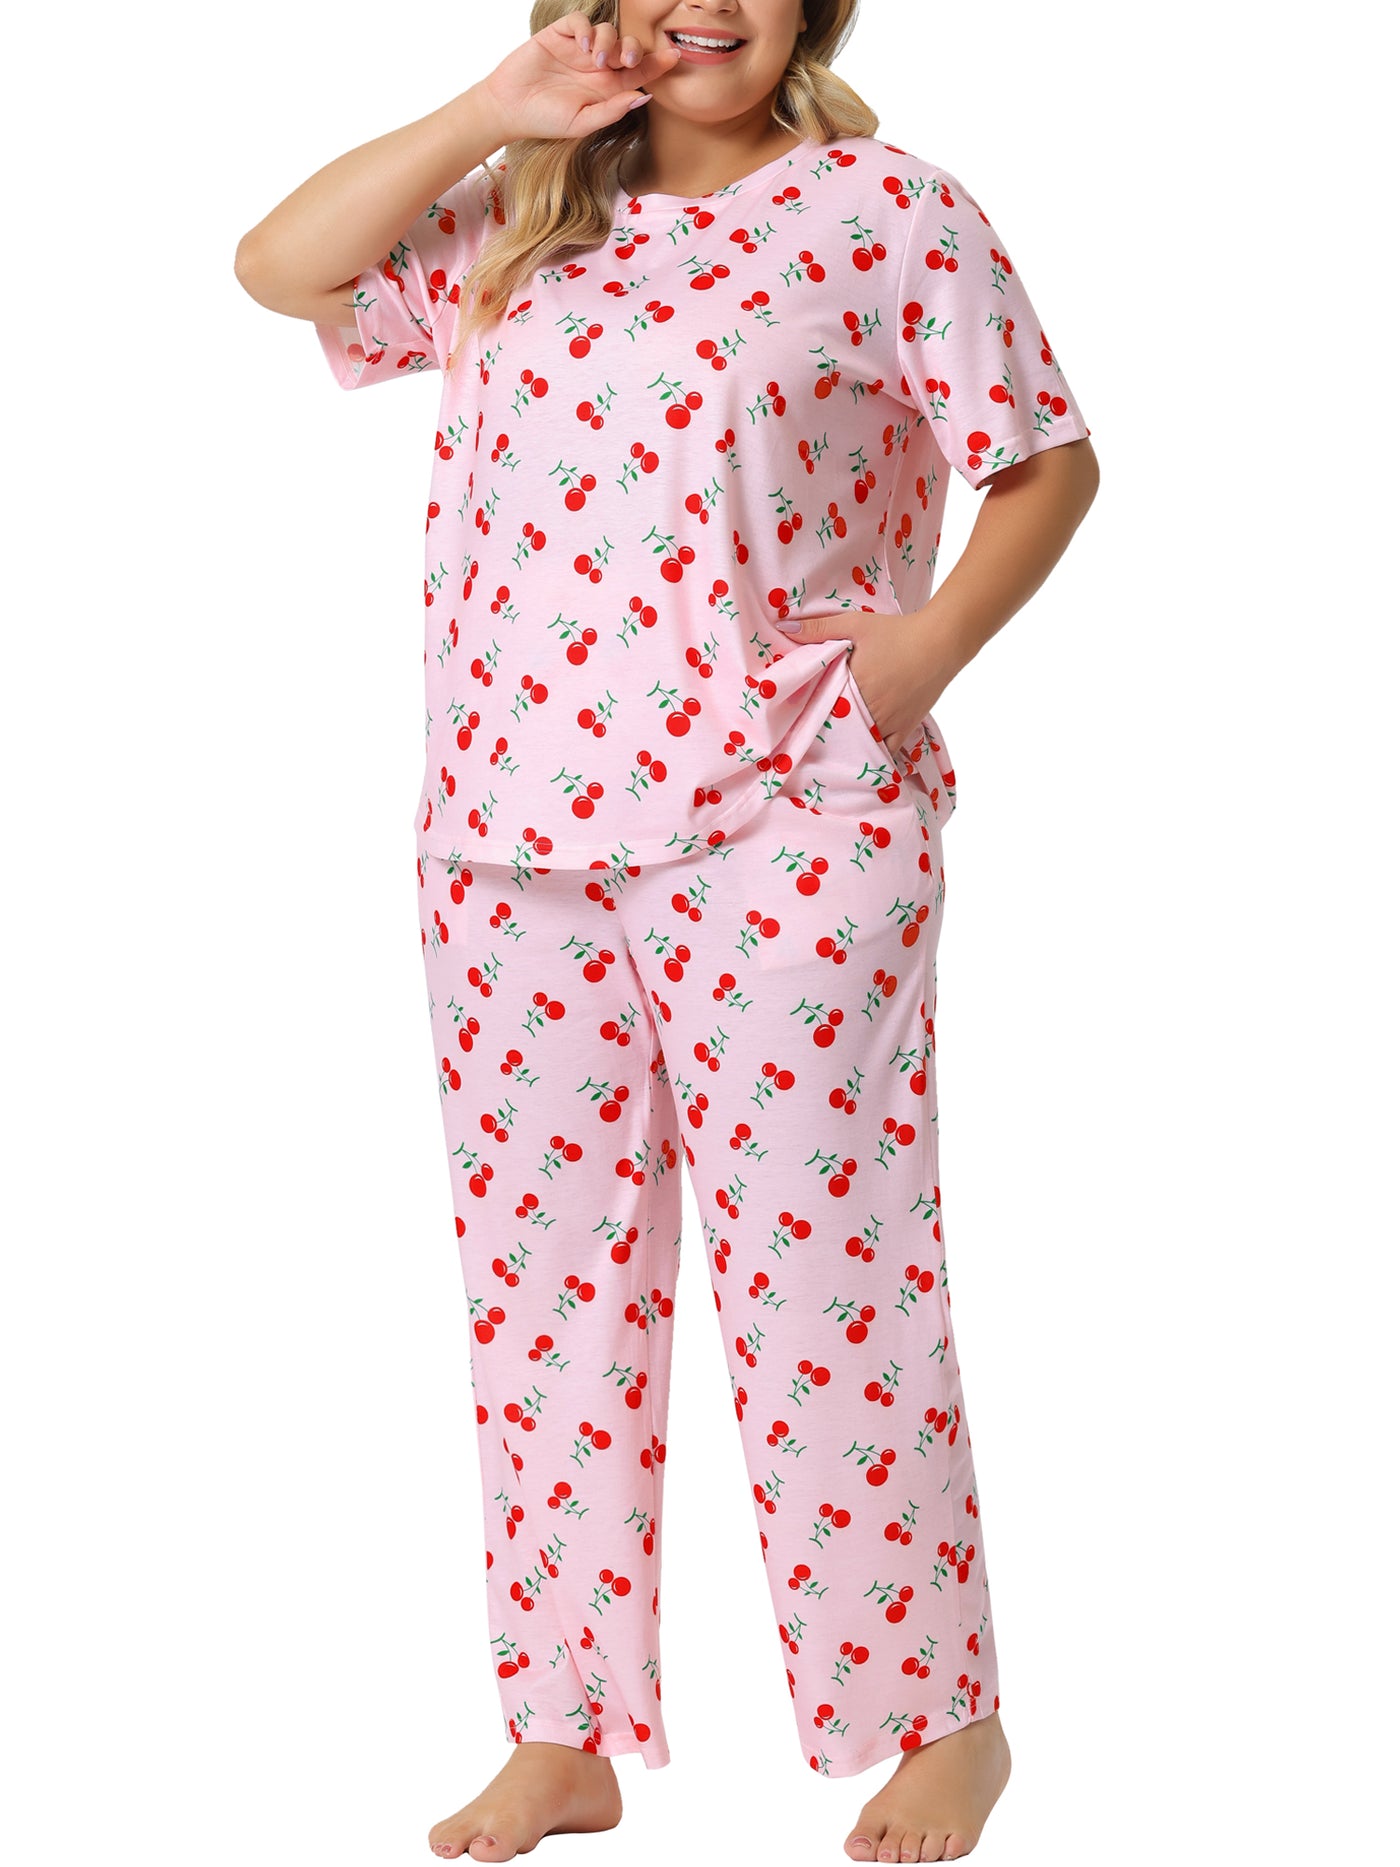 Bublédon Plus Size Pajamas Sets for Women Short Sleeve Cherry Print Elastic Soft Pockets Nightwear Sleepwear